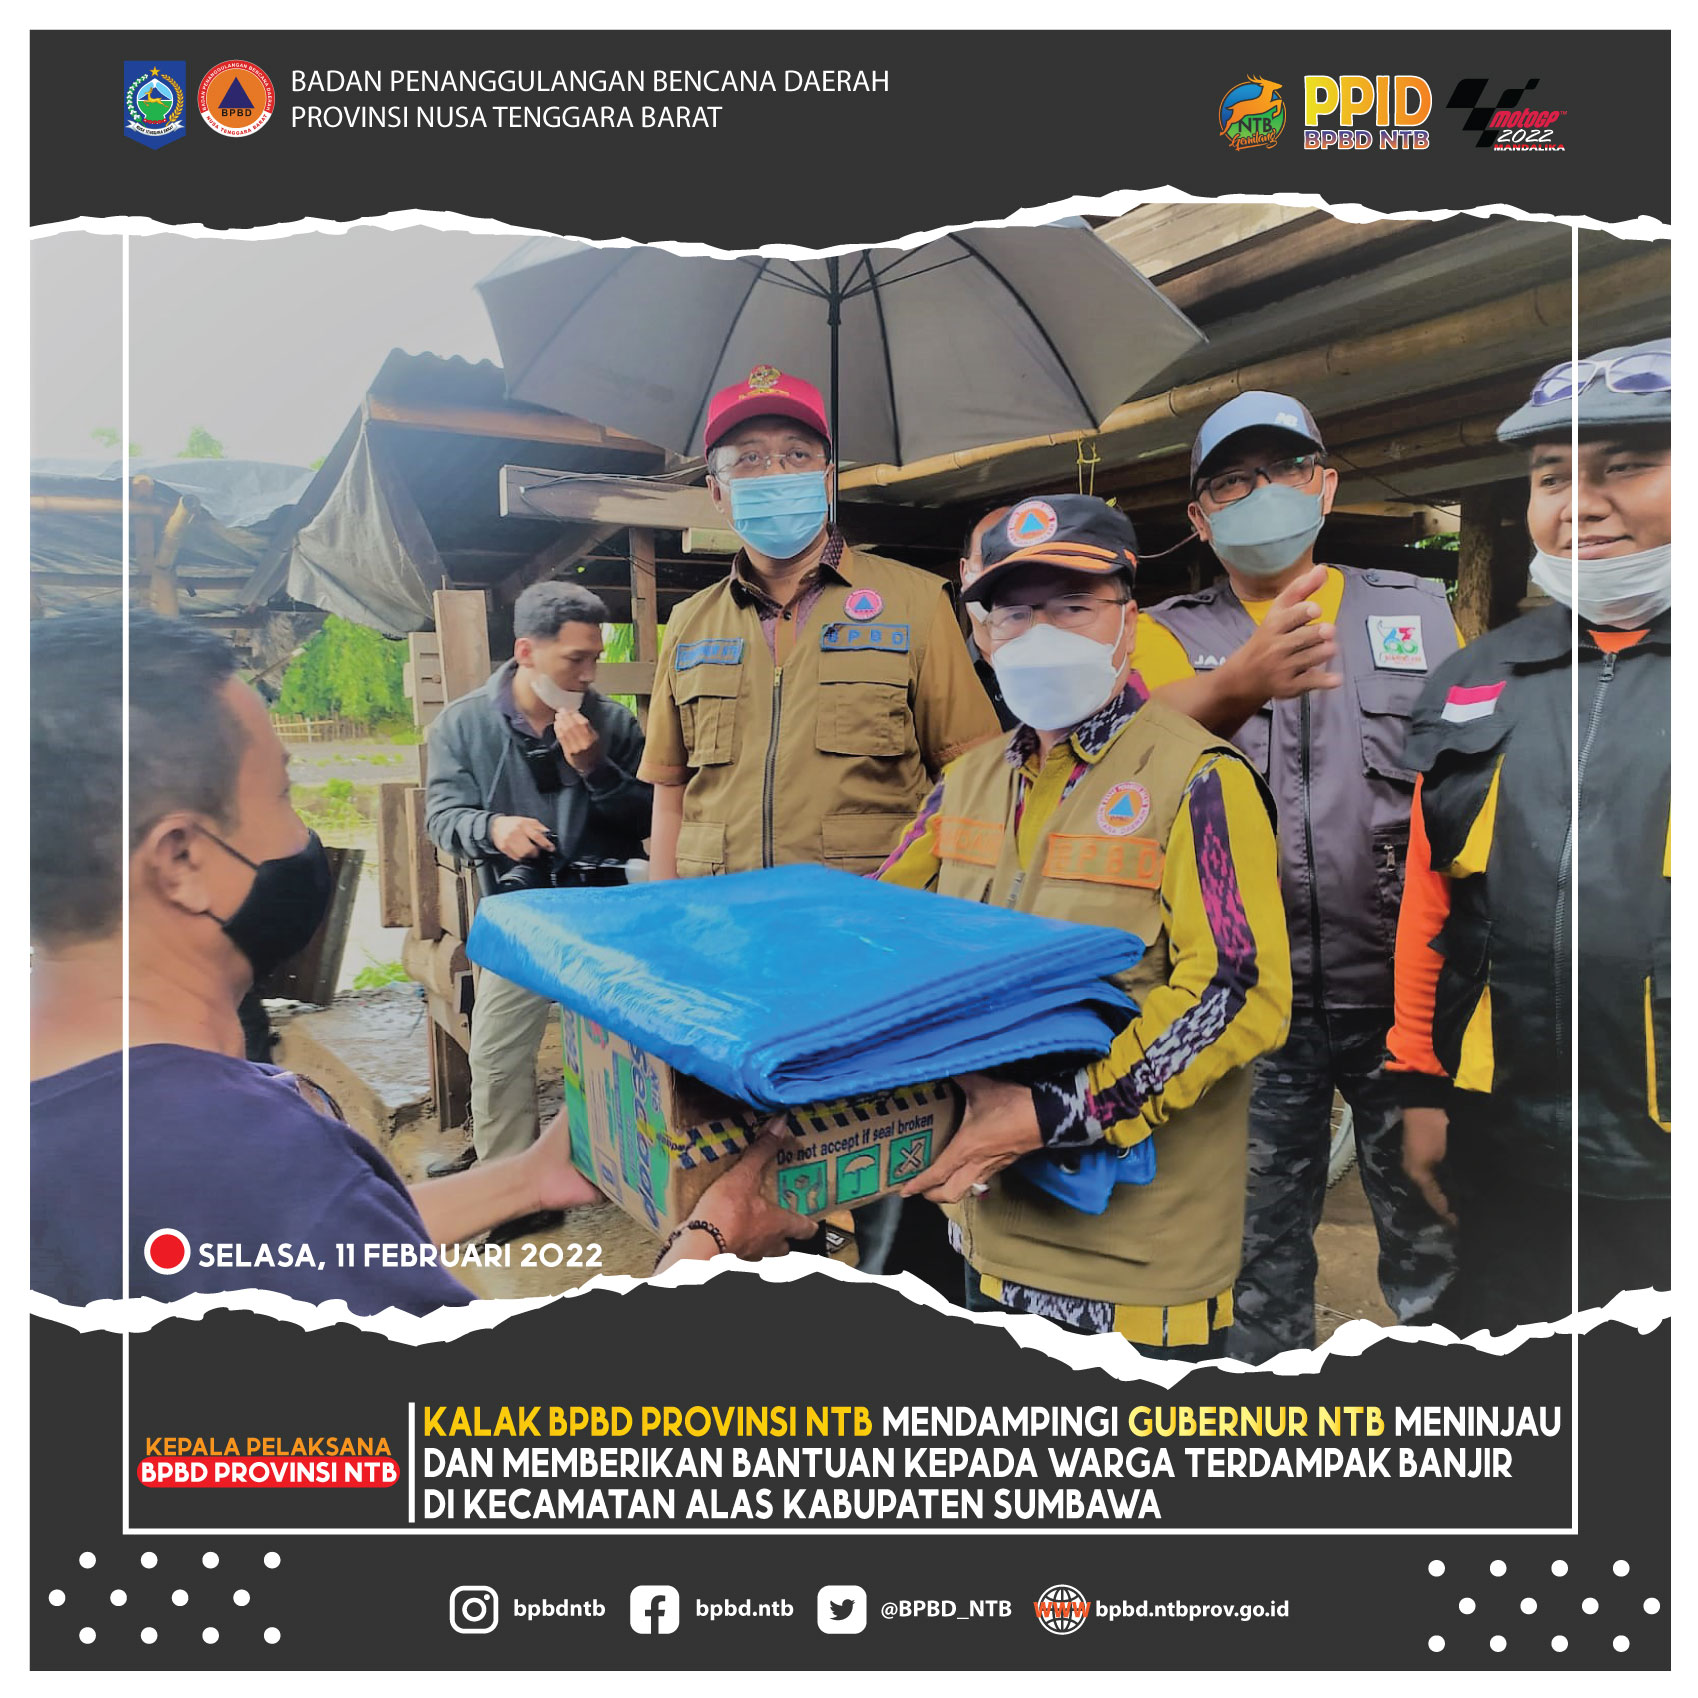 Kalak BPBD Provinsi NTB Mendampingi Gubernur NTB Meninjau dan Memberikan Bantuan Kepada Warga Terdampak Banjir Di Kecamatan Alas Kabupaten Sumbawa (Selasa, 15 Februari 2022)